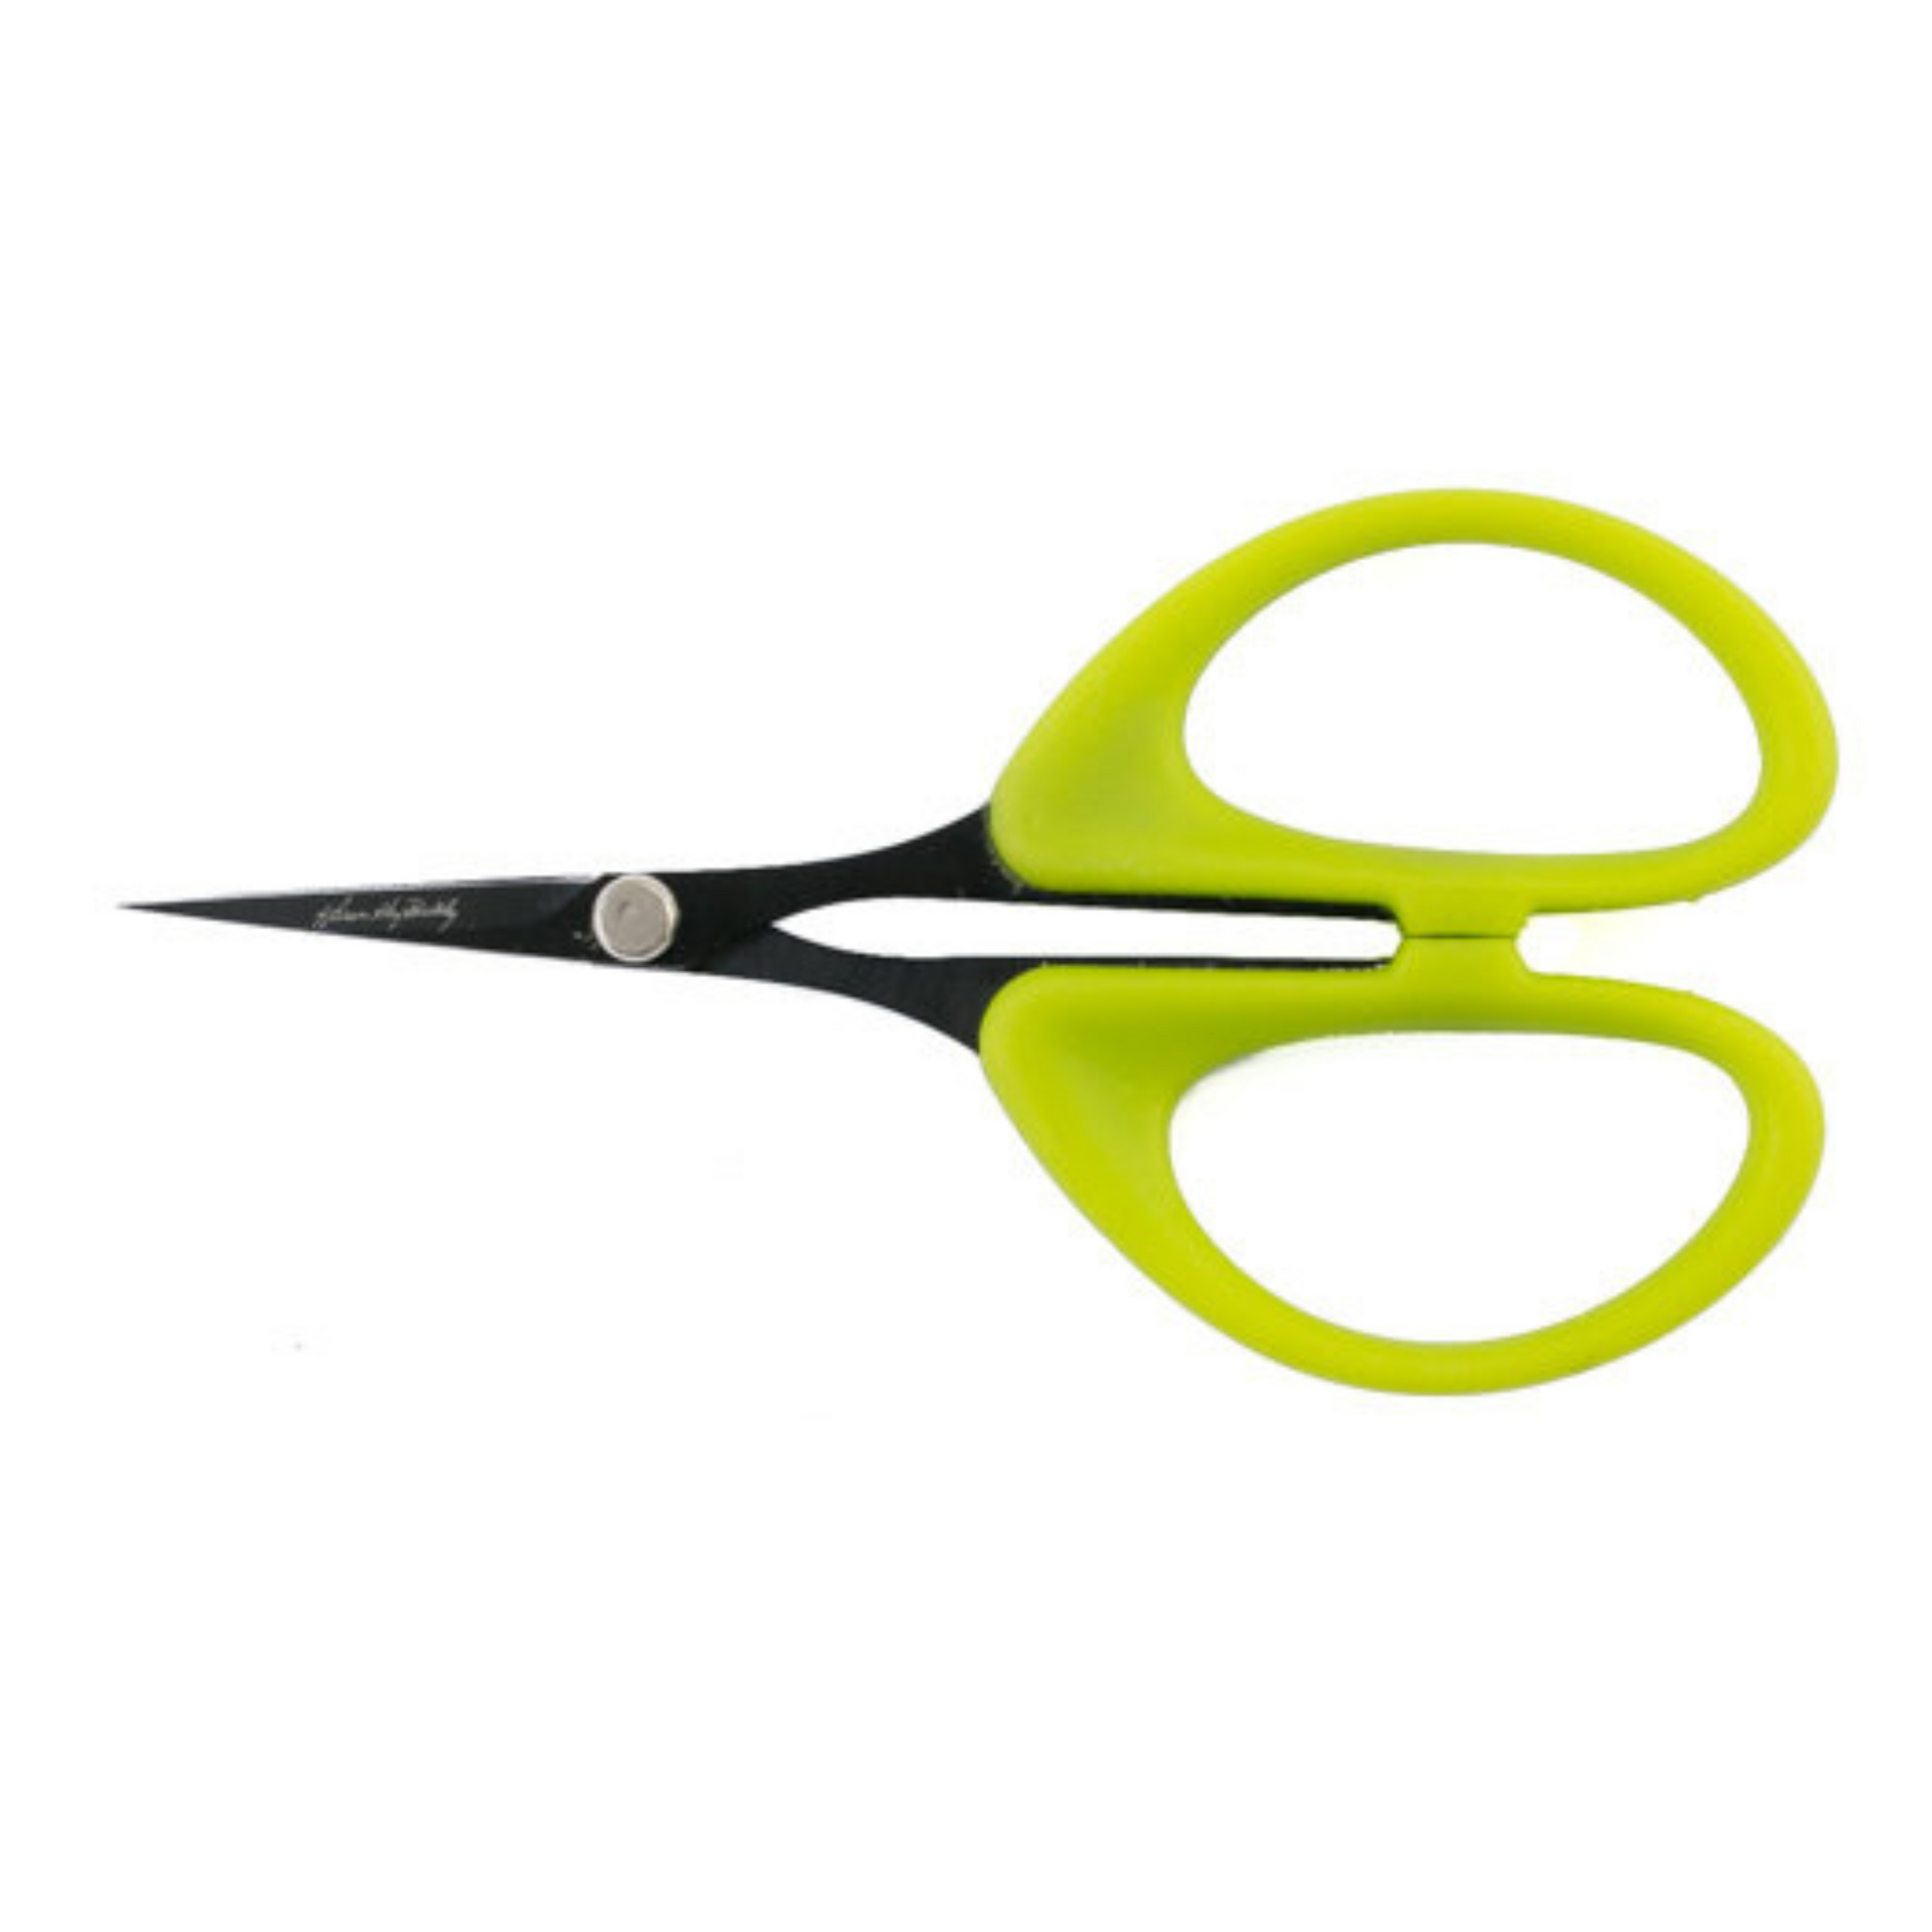 Karen Kay Buckley Perfect Small Green Scissors 4 - OzQuilts